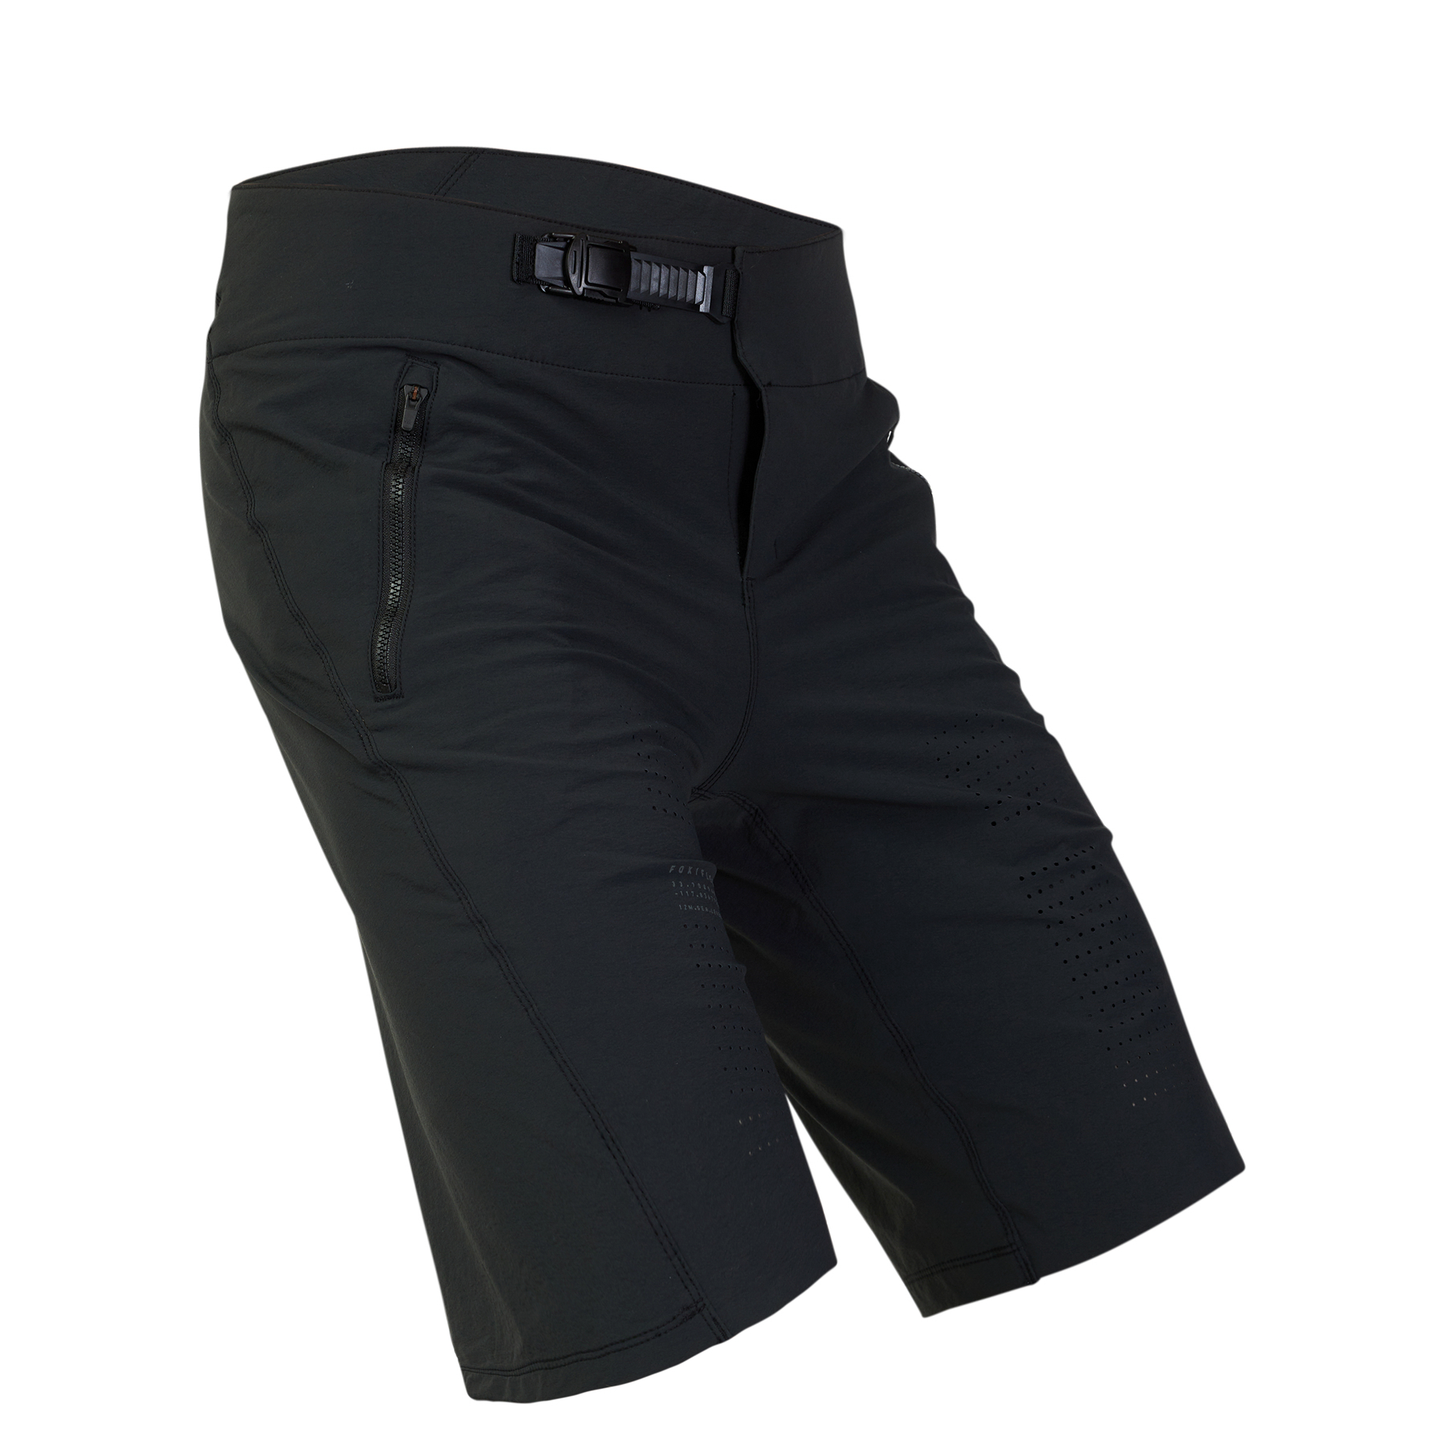 Fox Flexair Shorts With Liner - 2XL-38 - Black - Image 1